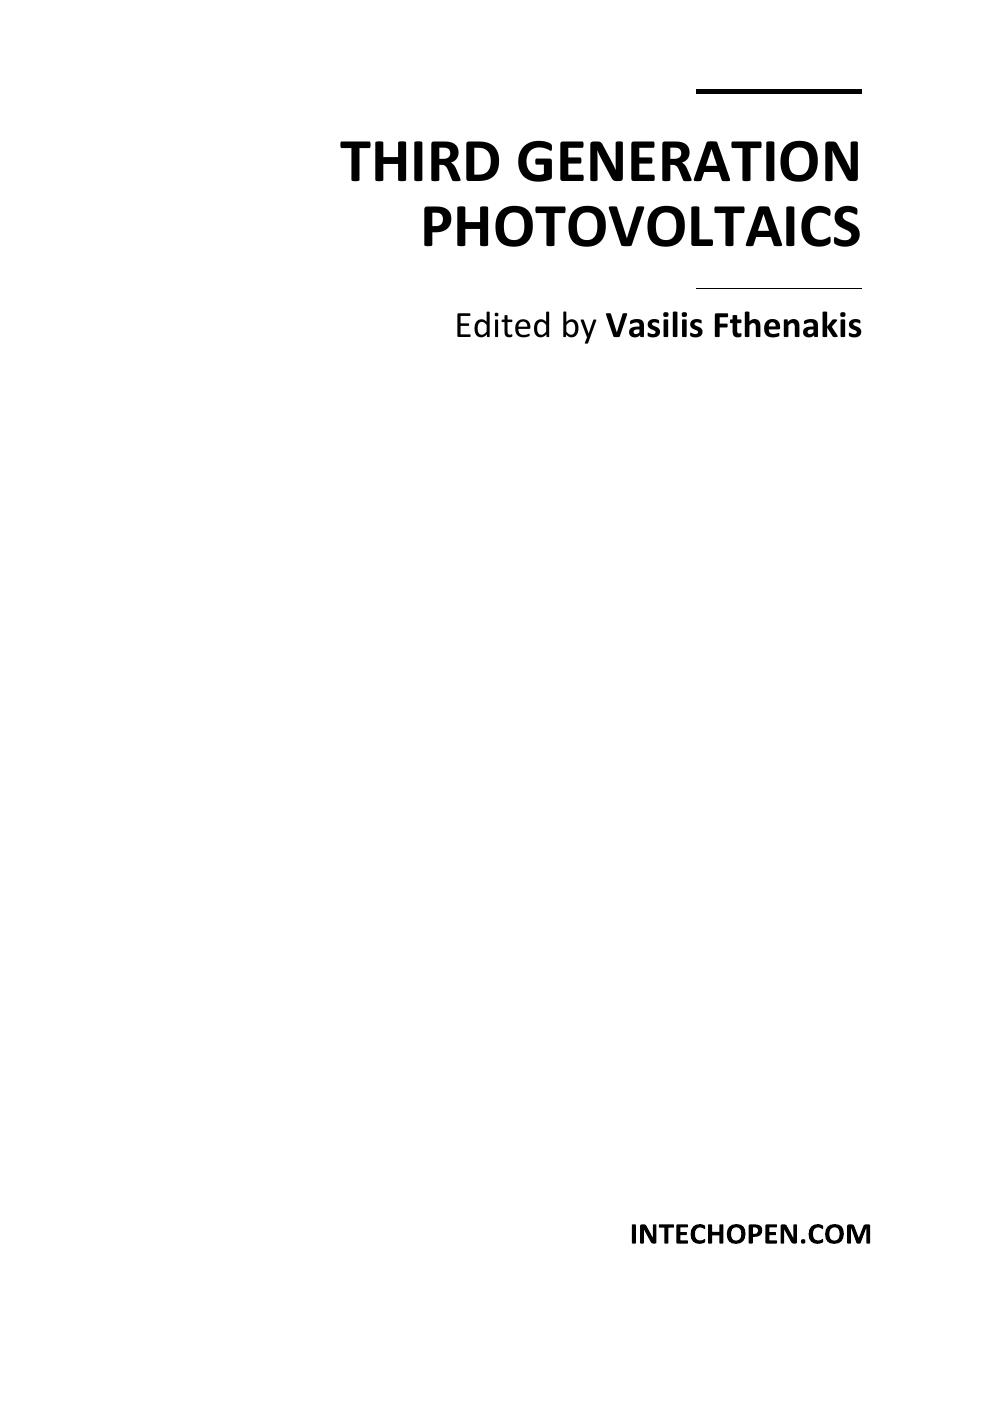 Third Generation Photovoltaics 2012.pdf